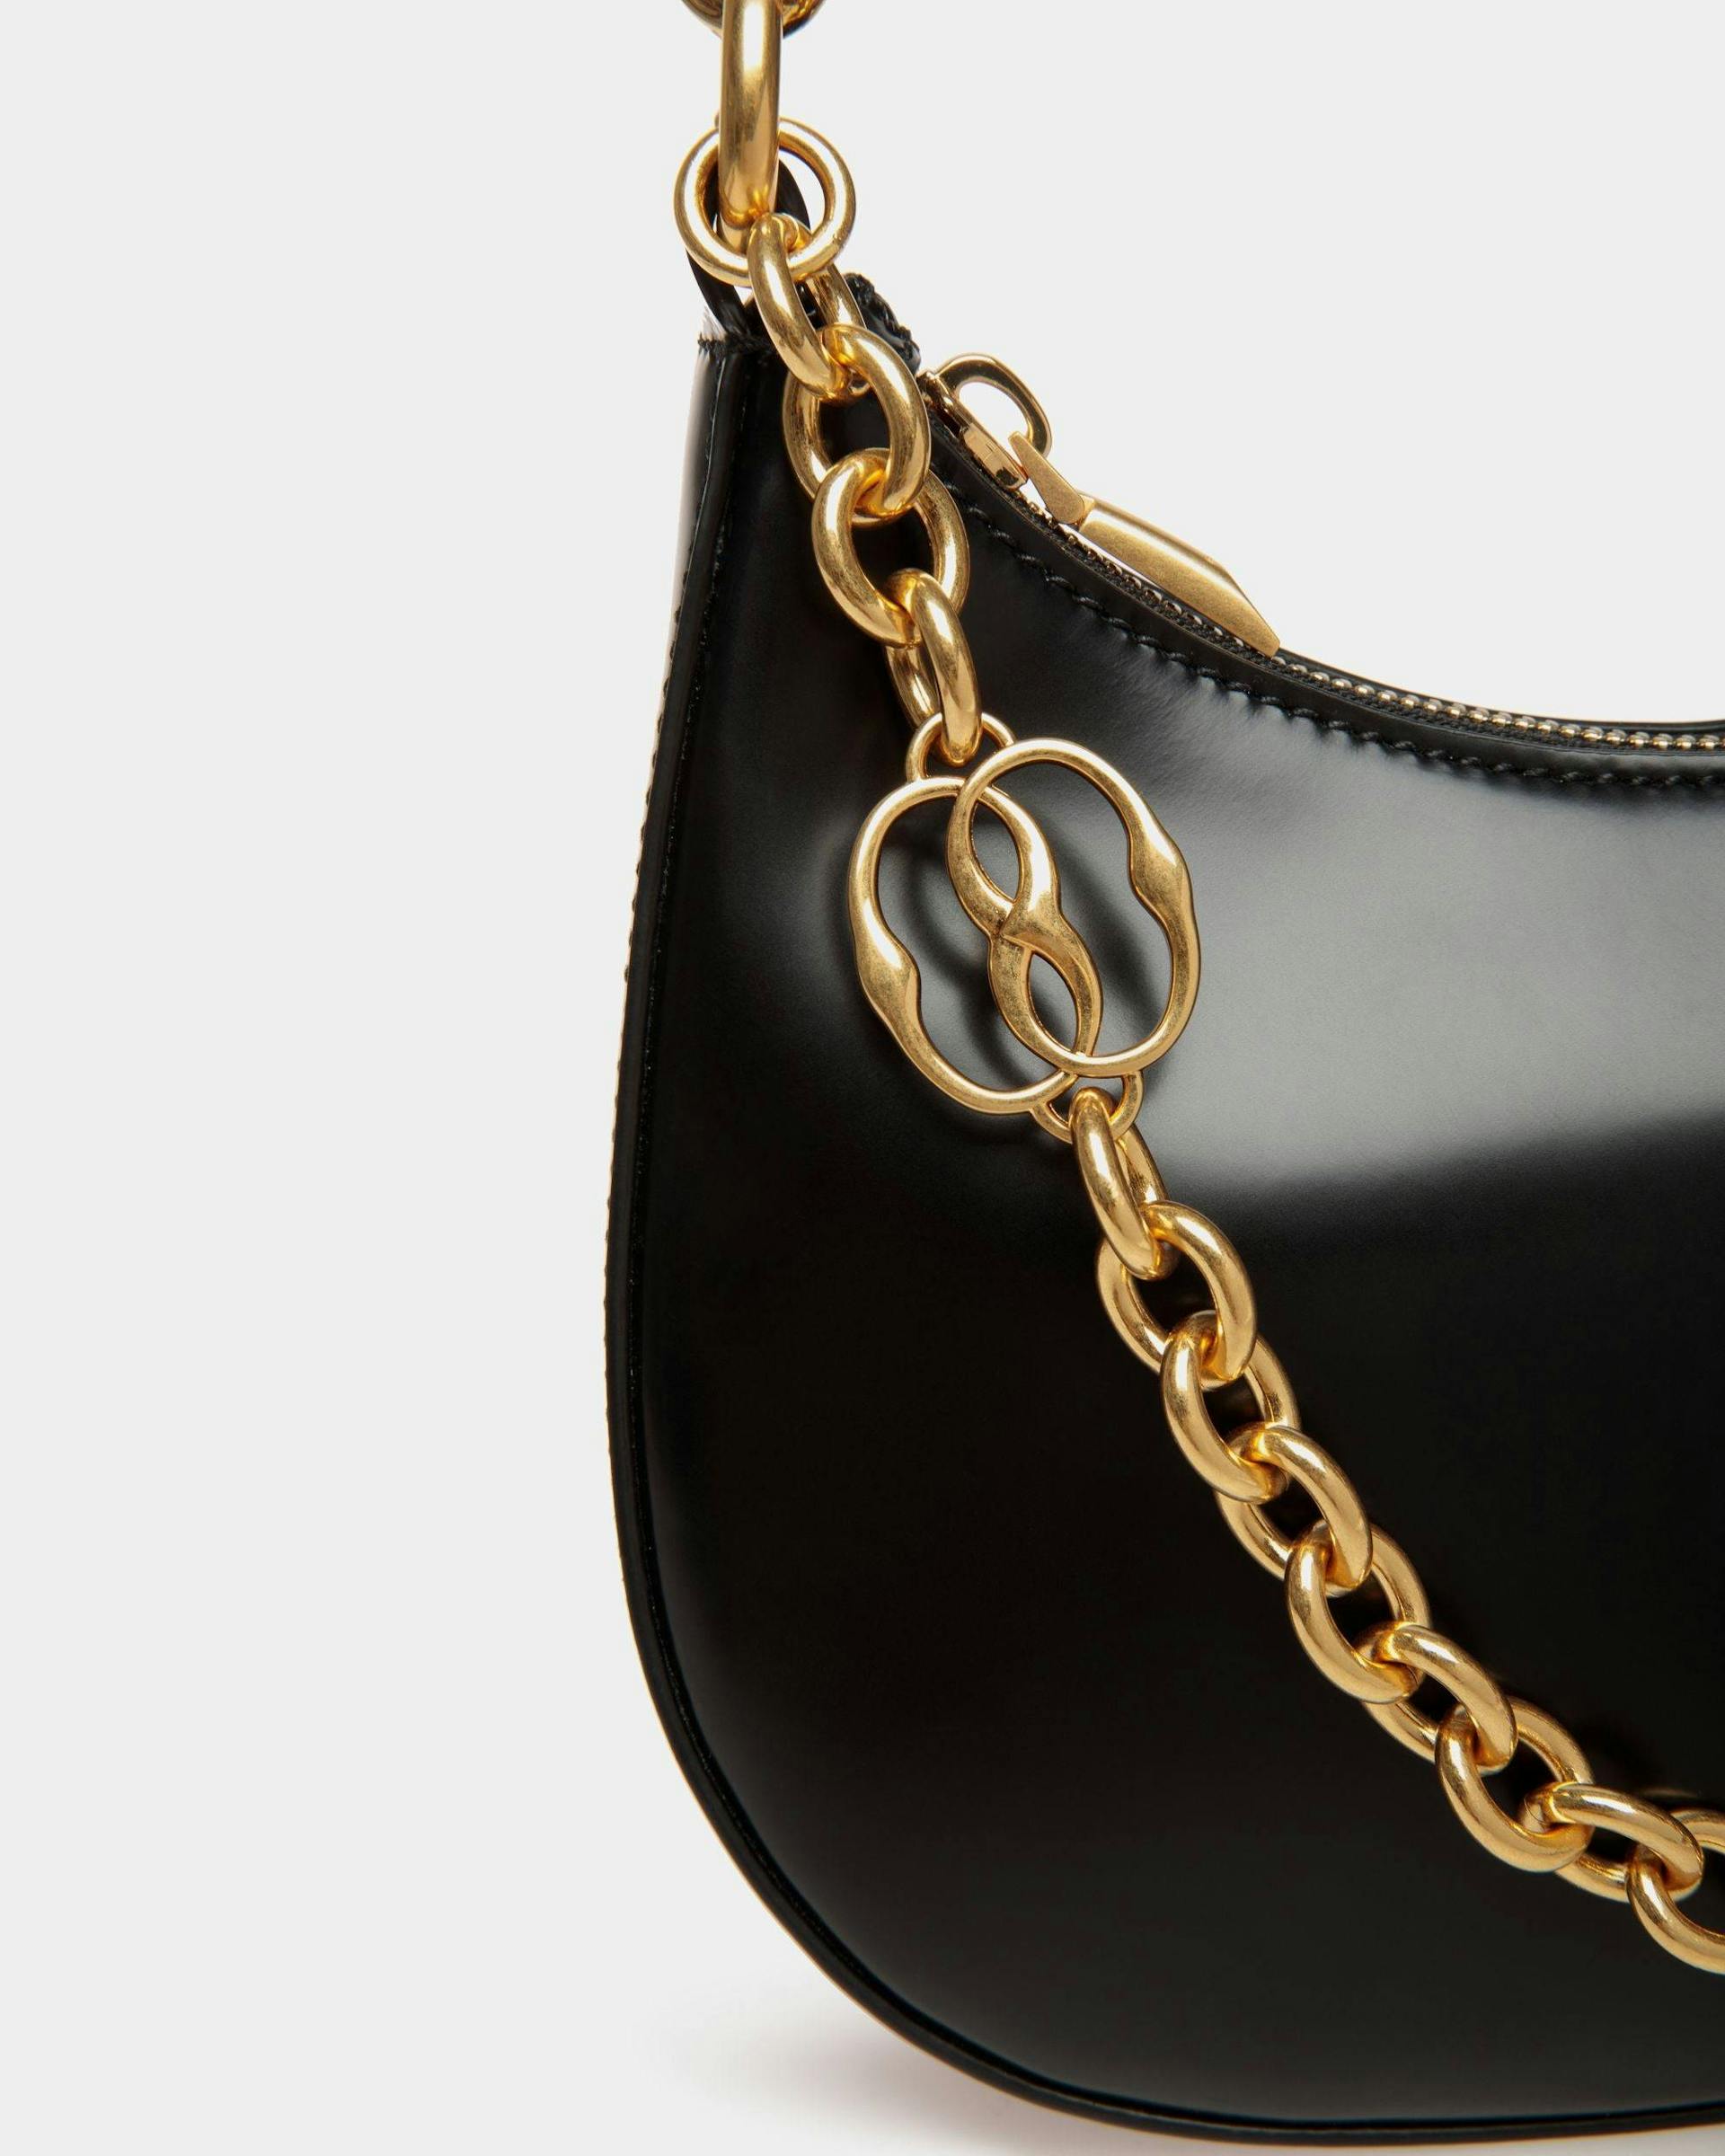 Women's Emblem Mini Crossbody Bag in Black Patent Leather | Bally | Still Life Detail